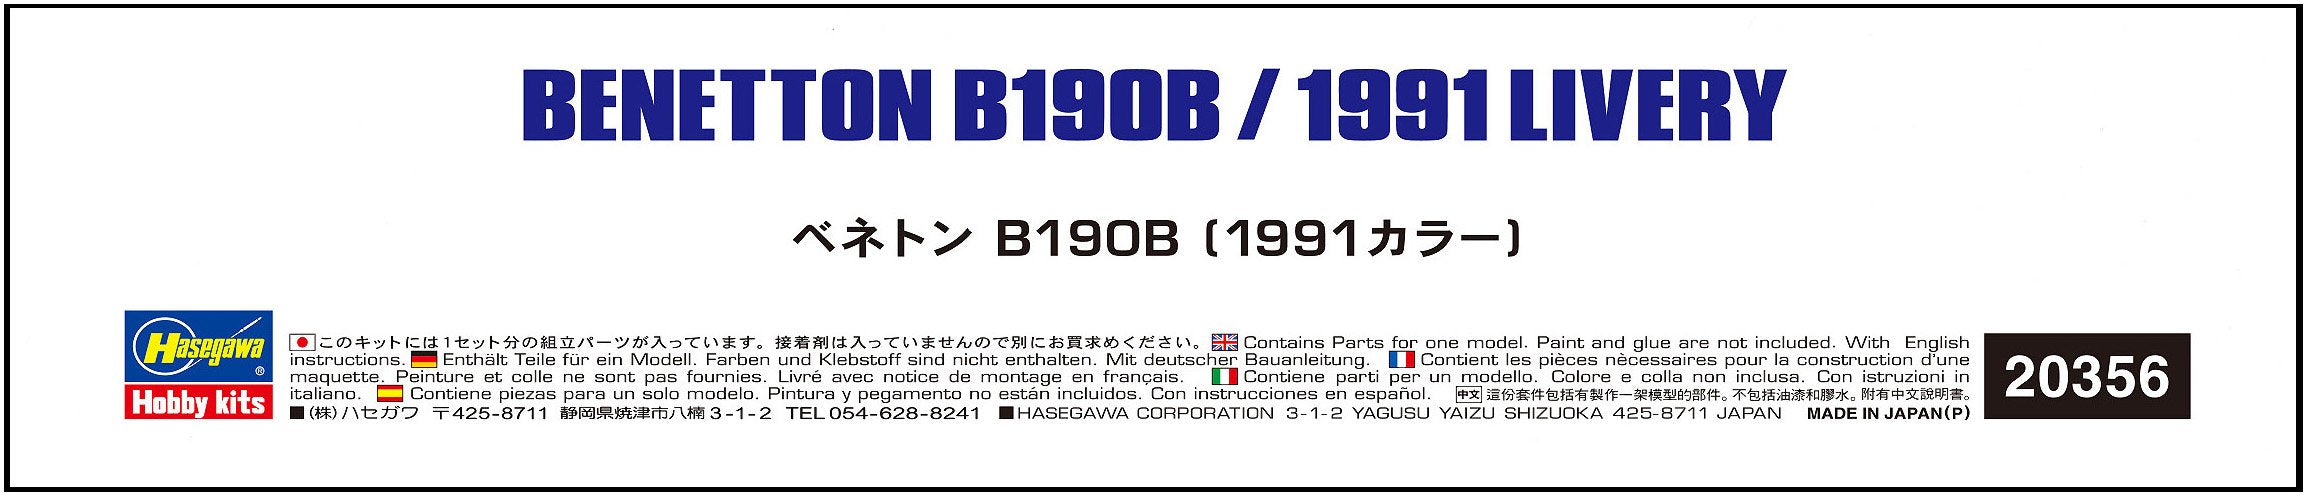 HASEGAWA 20356 Benetton B190B 1991 Farbbausatz im Maßstab 1/24